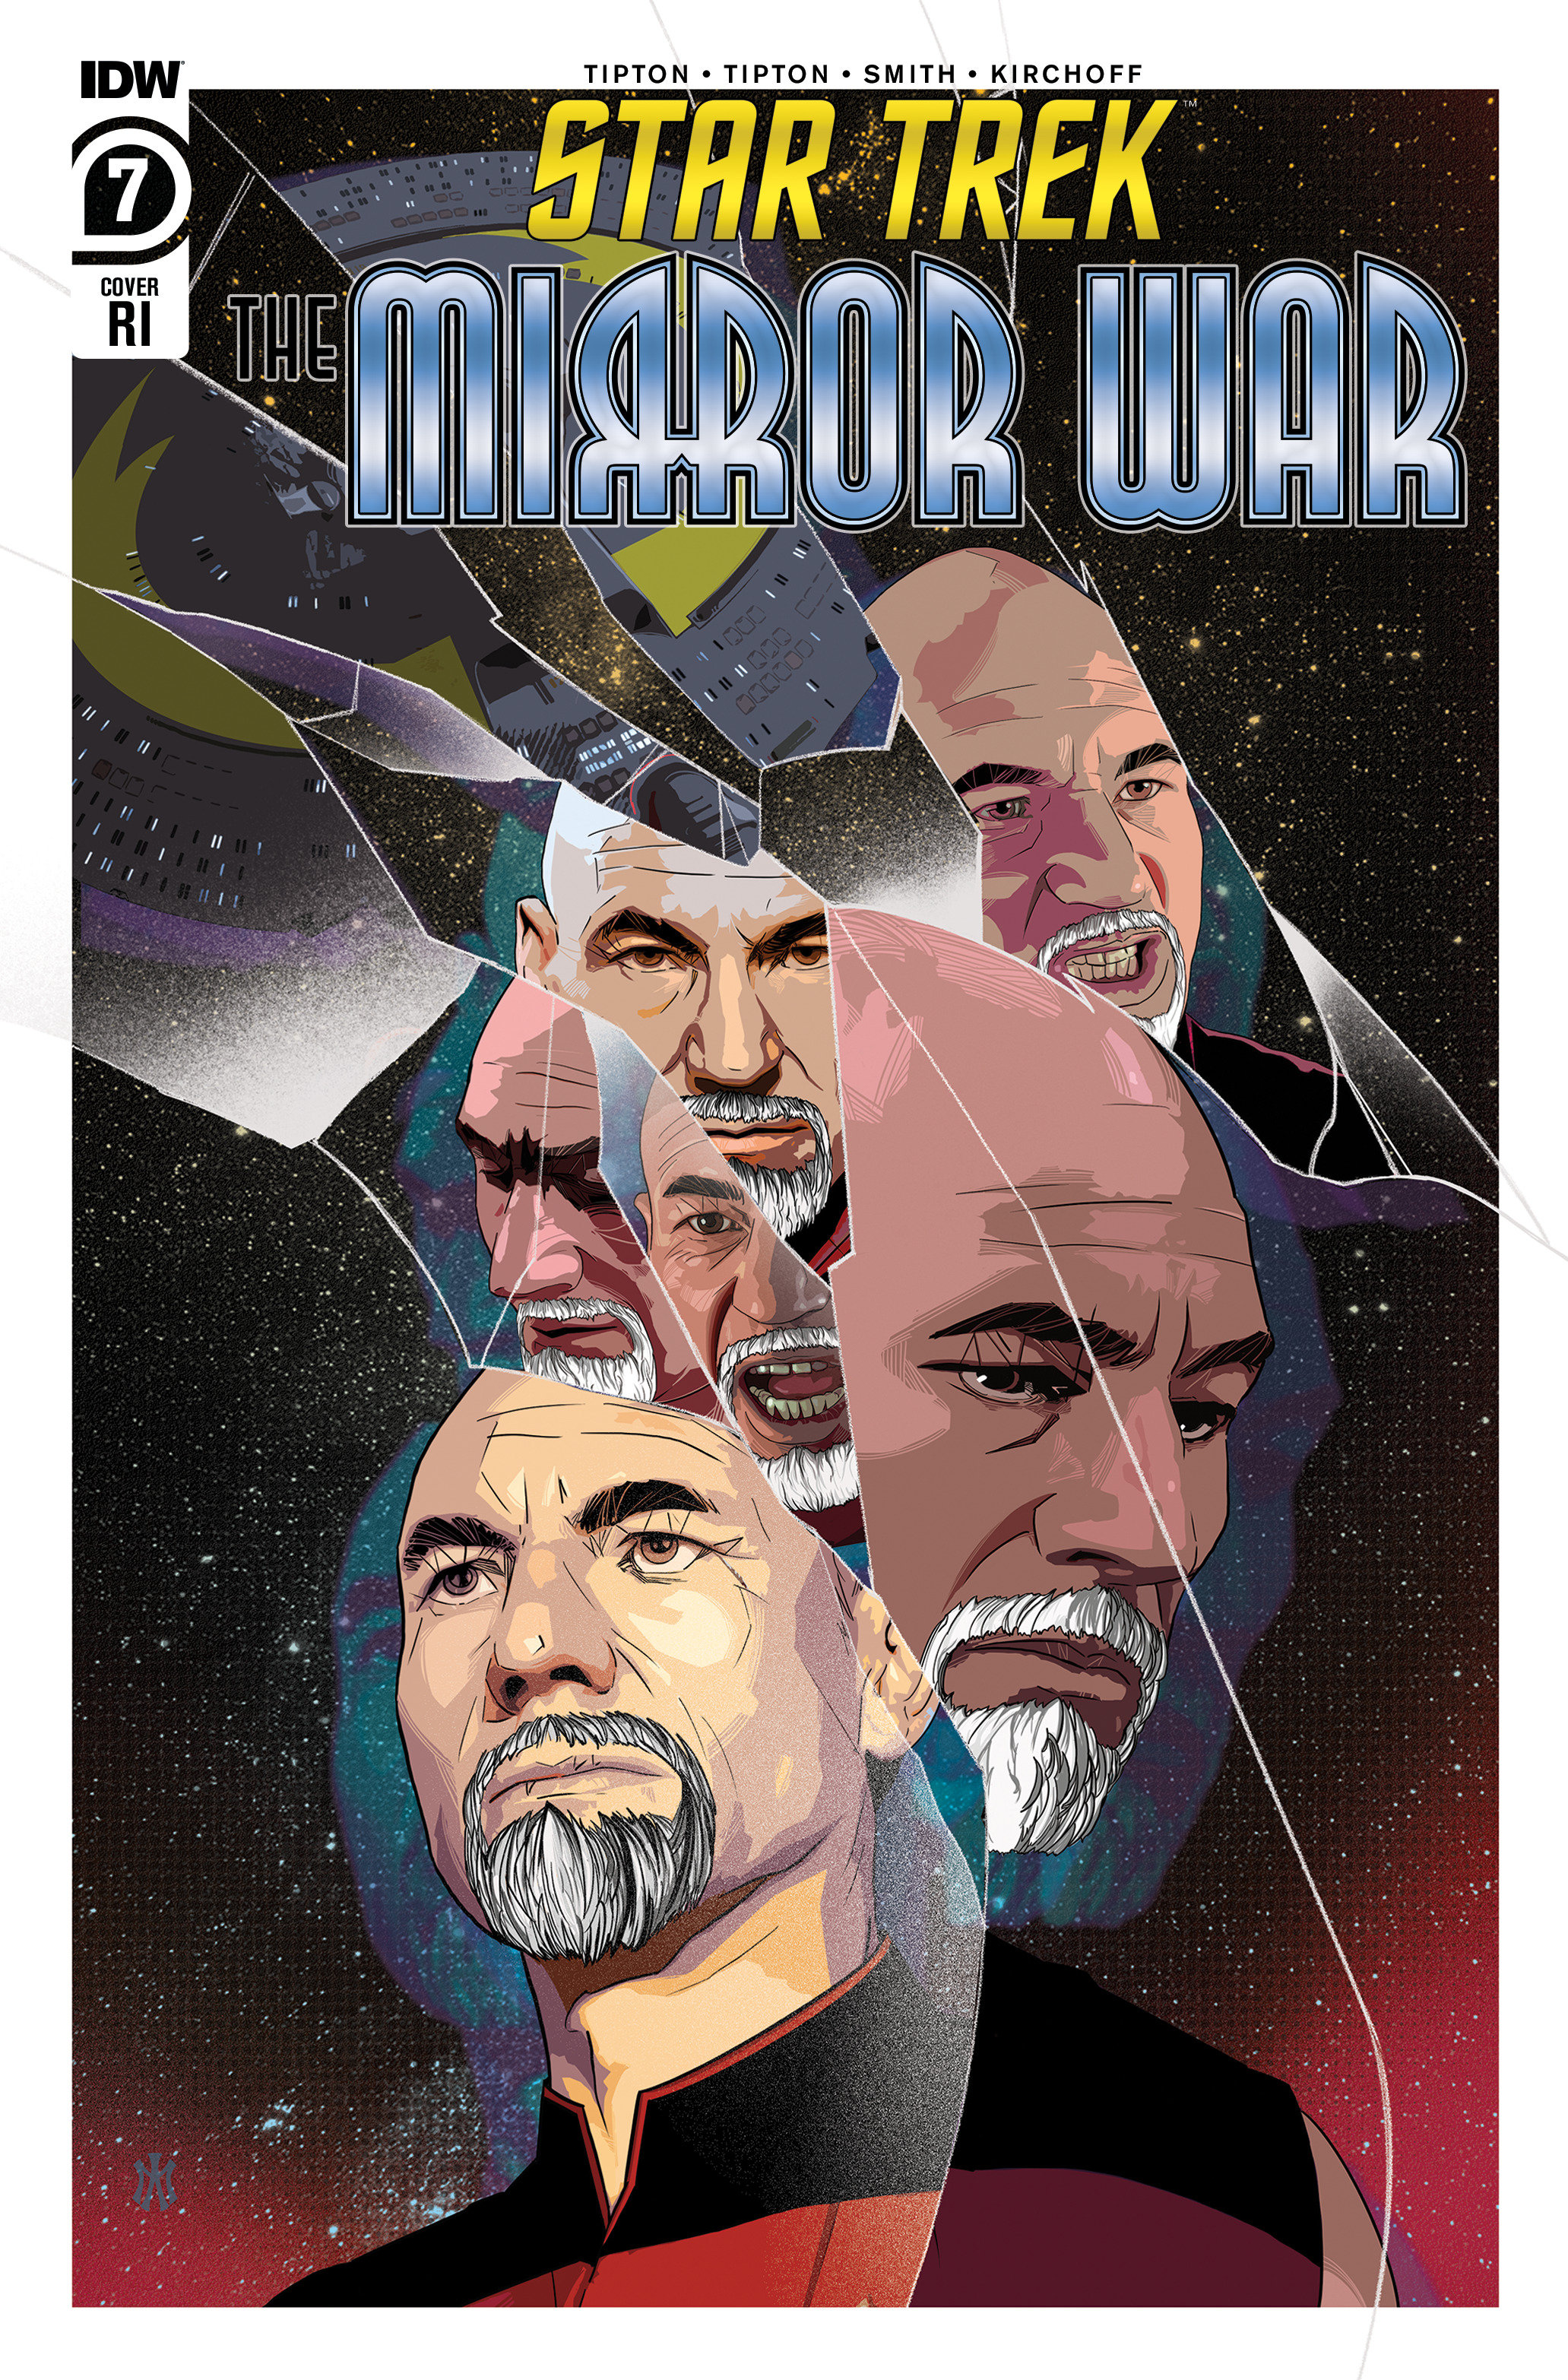 Star Trek The Mirror War #7 Cover Retailer Incentive Alvarado 1 for 15 Variant